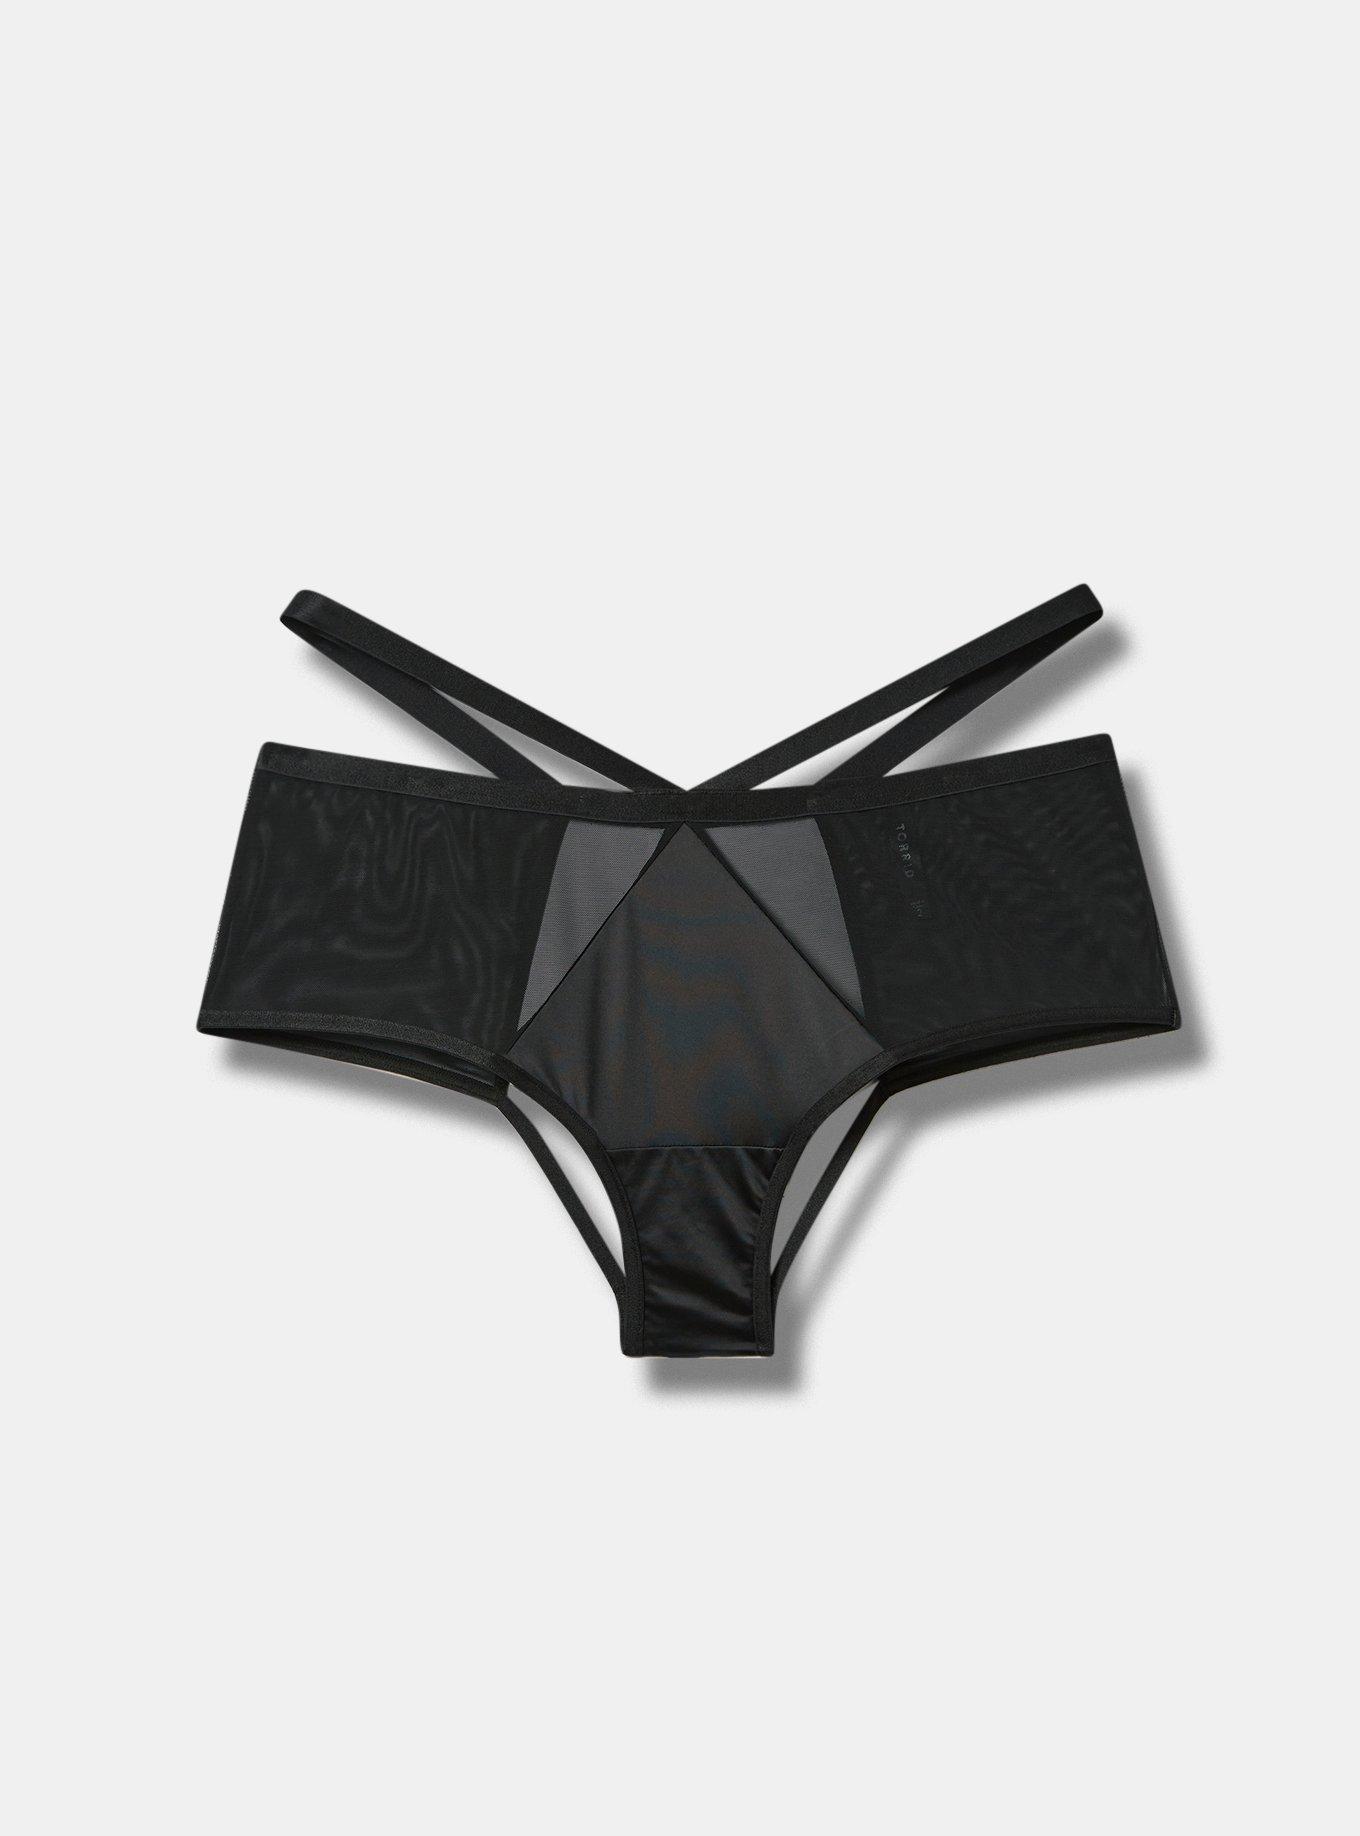 Torrid Thong Panties Underwear Wide Lace Gold Foil Bat Halloween Plus Sz 3  22 24